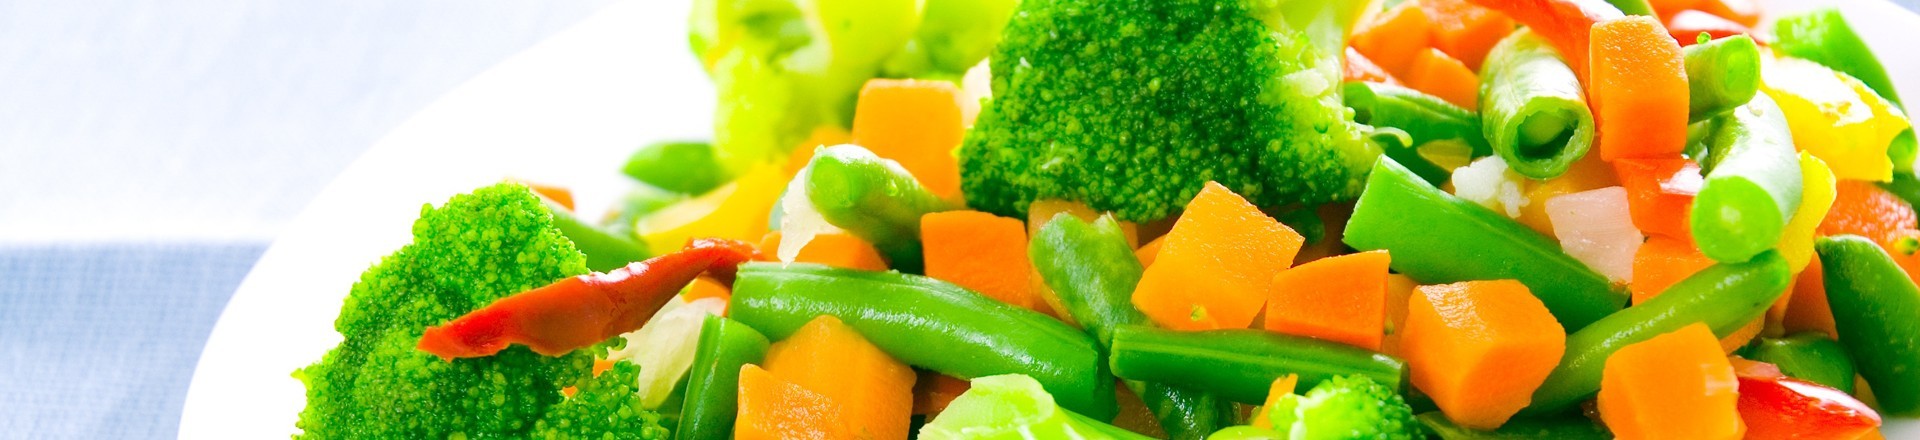 healthy diet recipe steamed vegetables